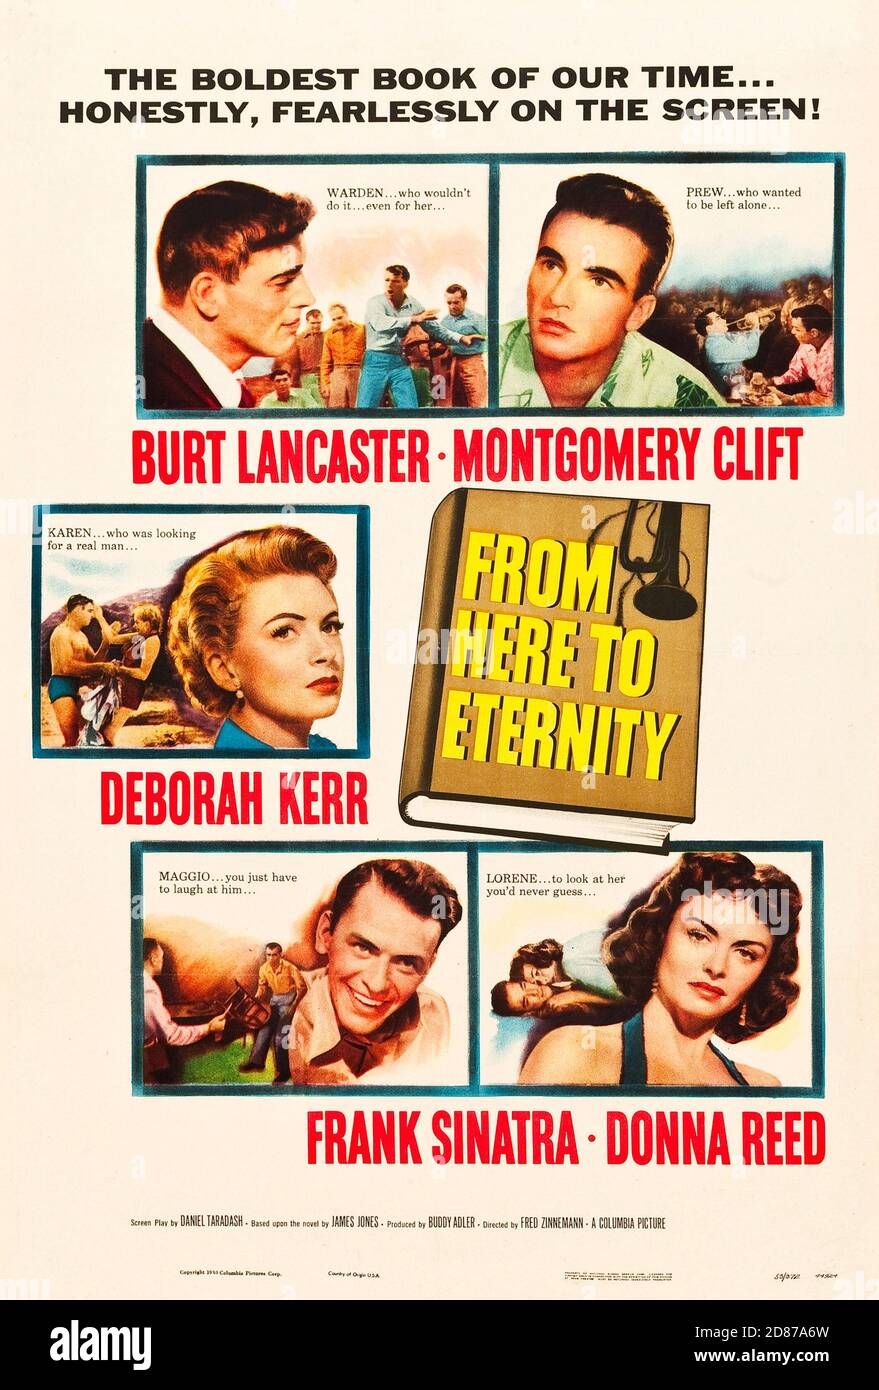 Vintage Filmplakat, From Here To Eternity mit Frank Sinatra, Burt Lancaster, Montgomery Clift und Deborah Kerr. 1953. Stockfoto